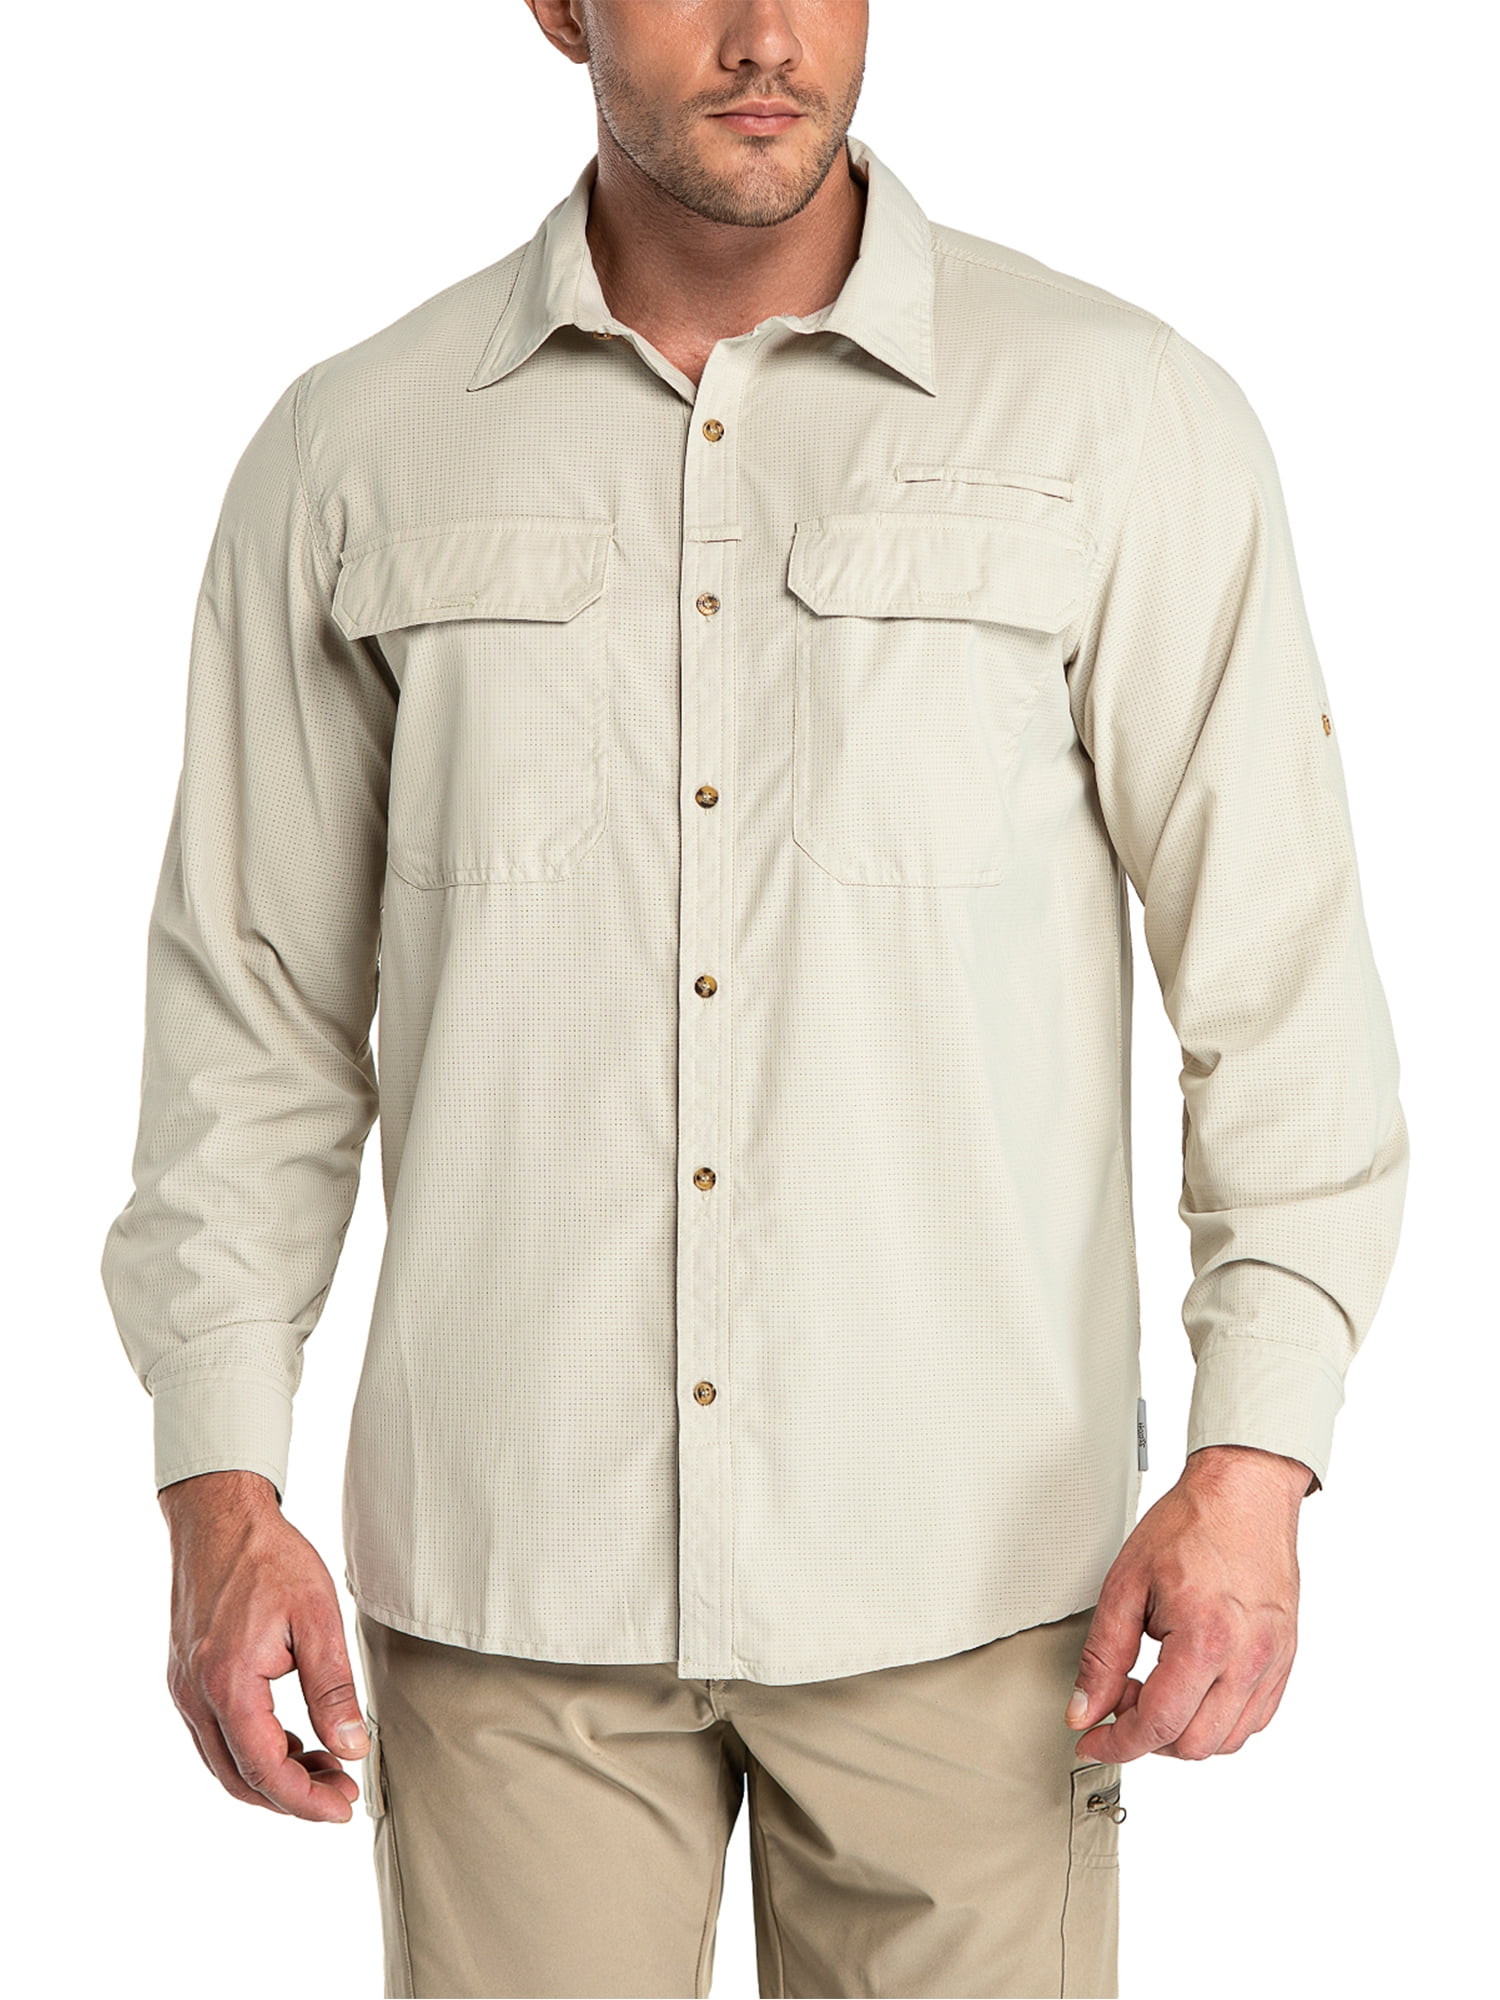 33,000ft Men's Long Sleeve Sun Protection Shirt UPF 50+ UV Quick